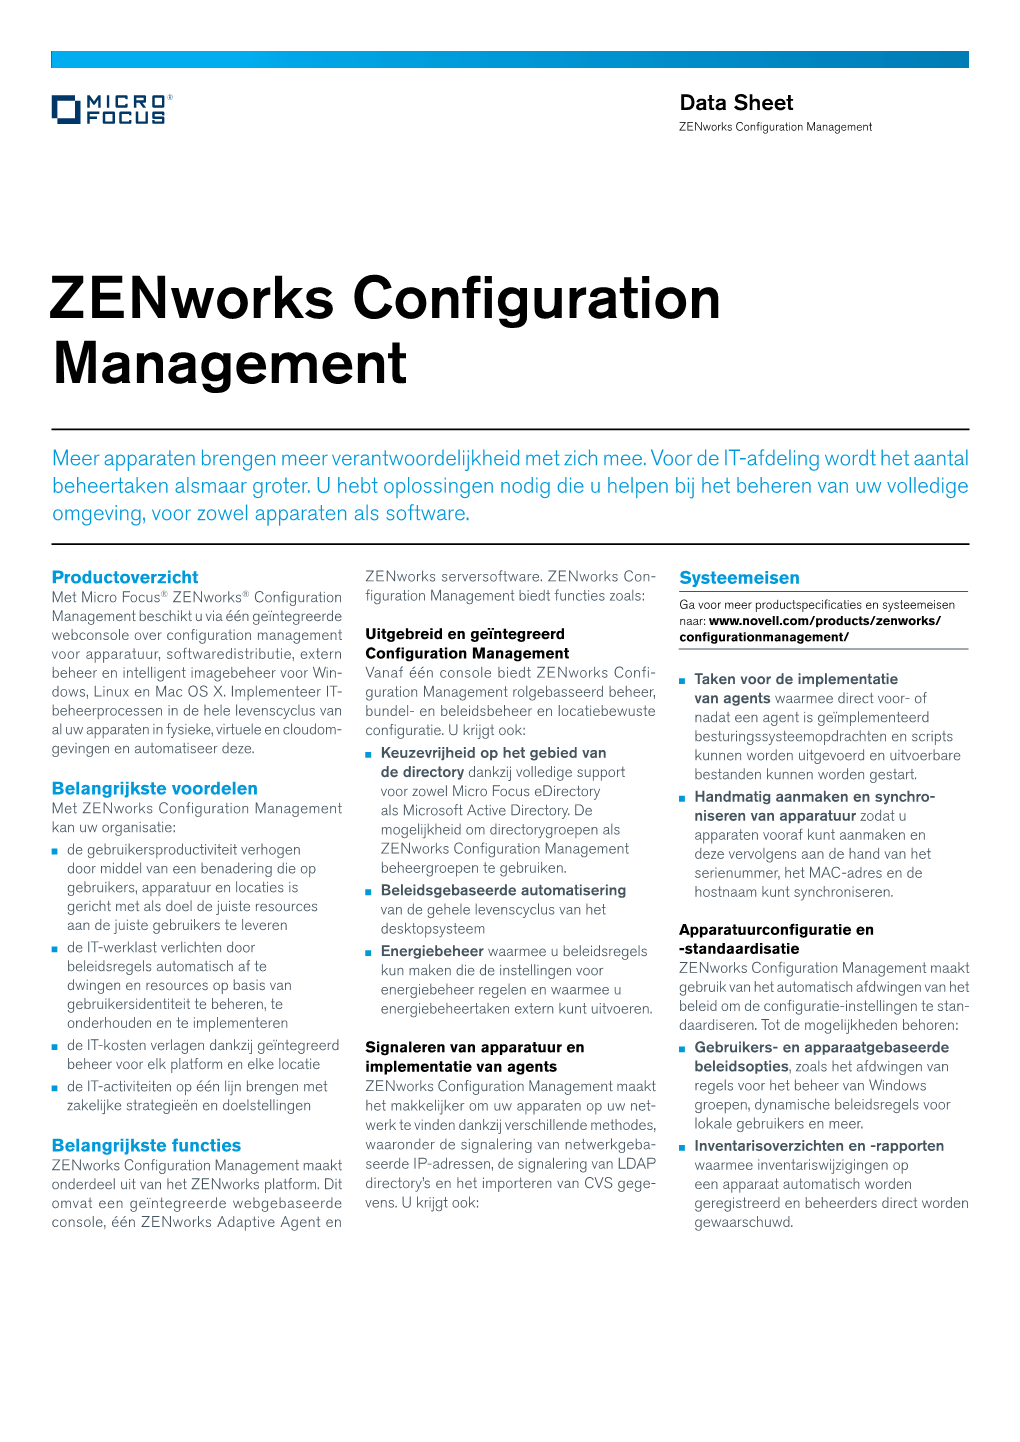 Zenworks Configuration Management